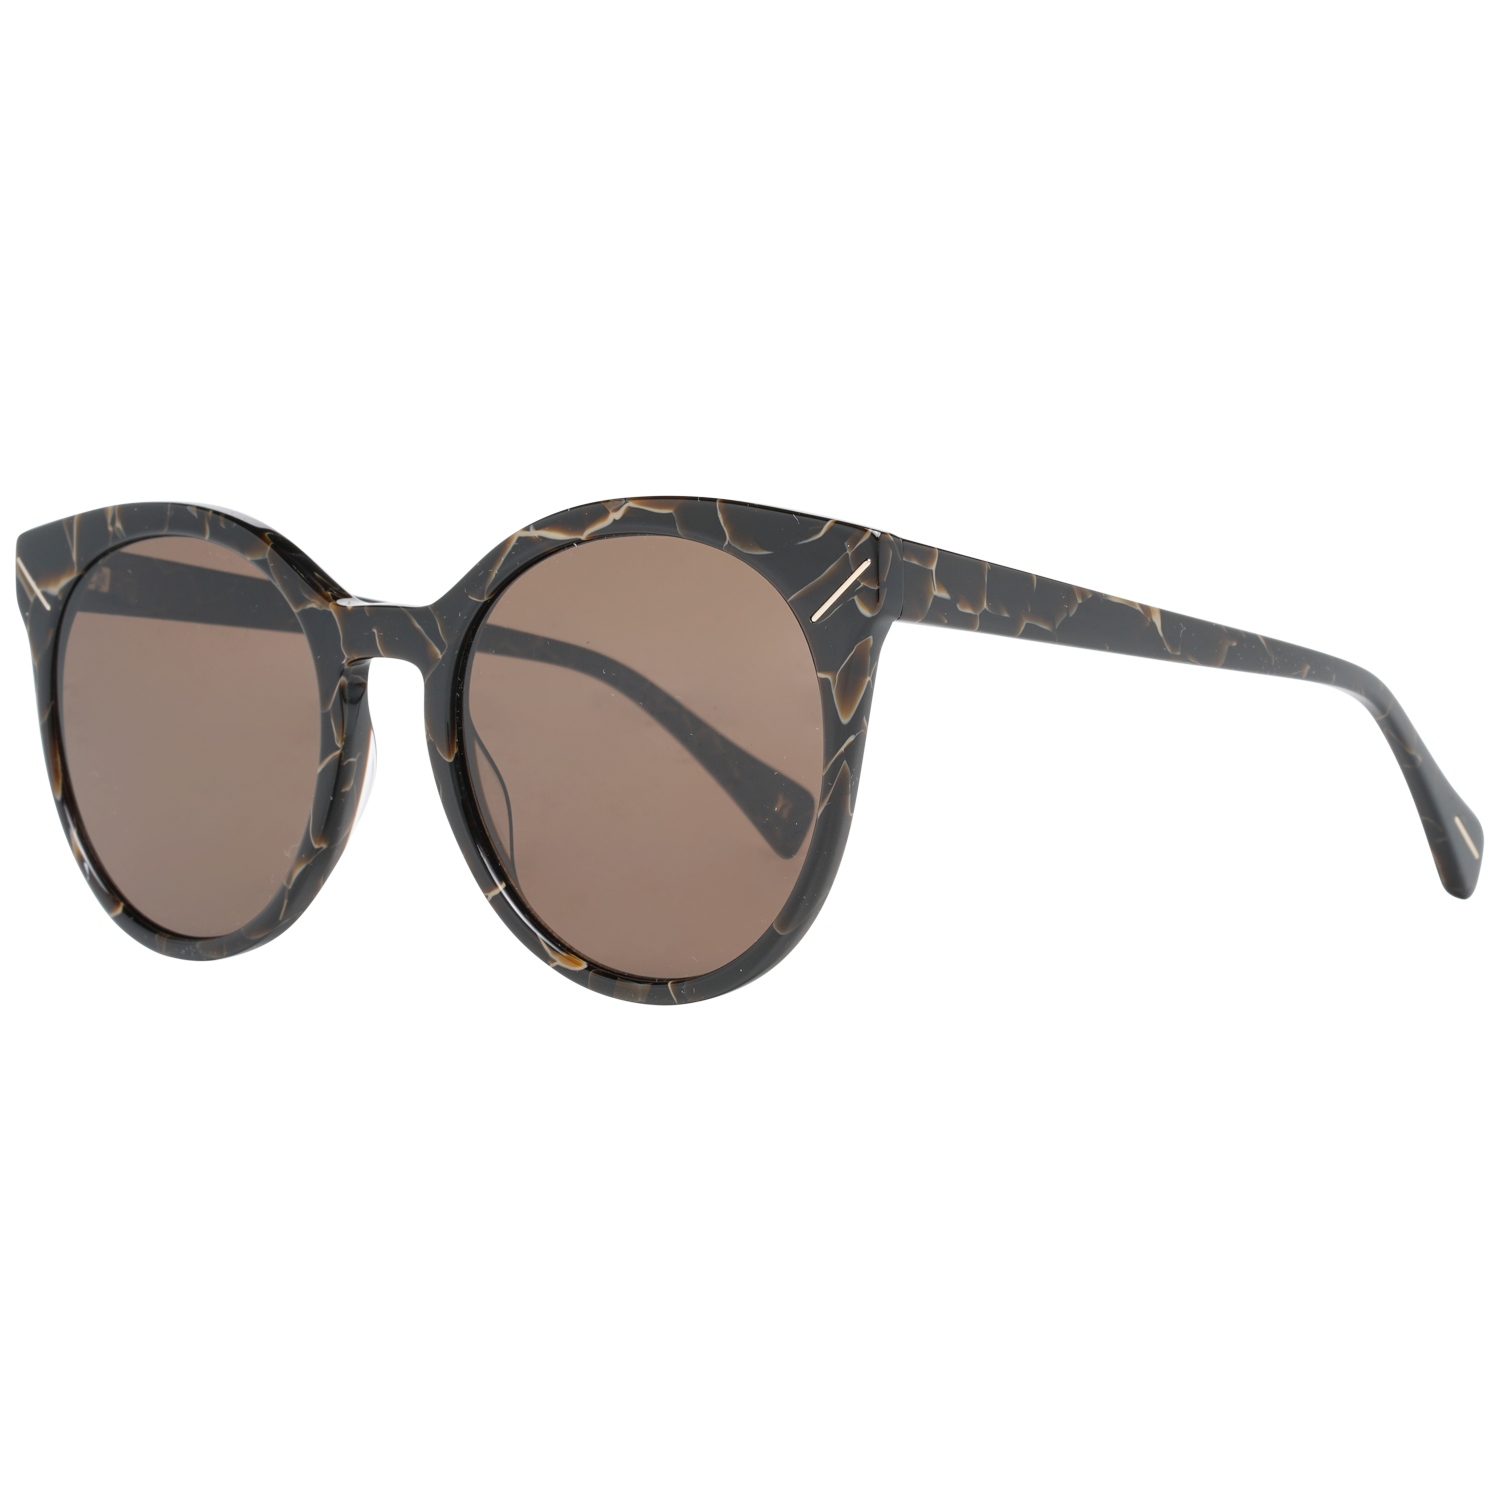 Yohji Yamamoto Sunglasses YS5003 134 54 Brown